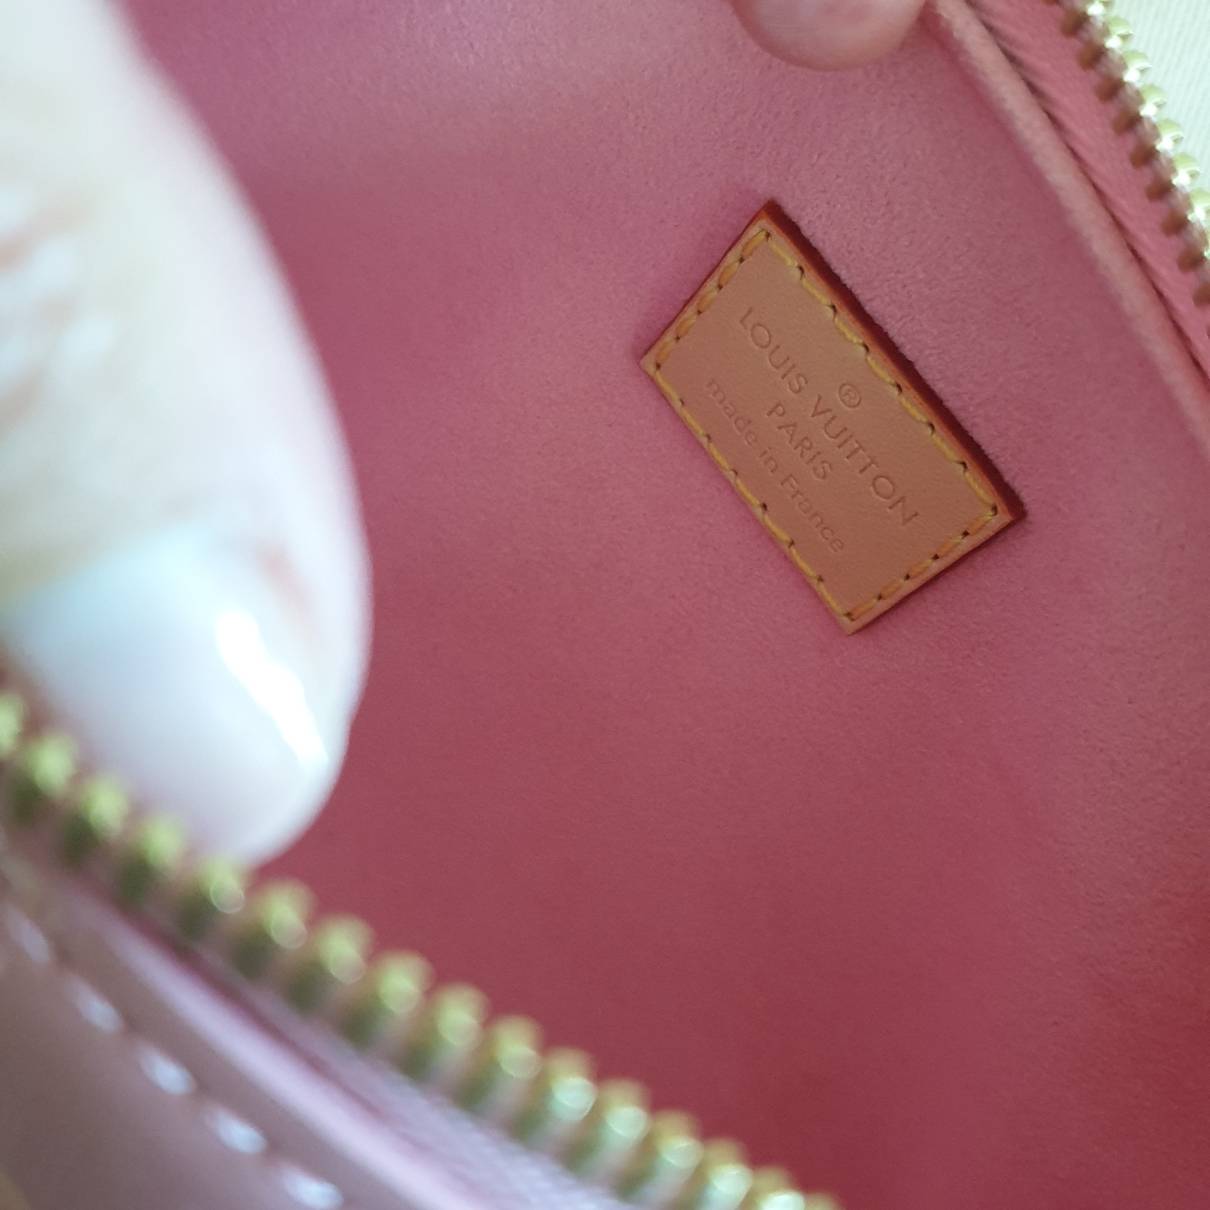 Louis Vuitton Louis Vuitton Nano Speedy Mochi Pink handbag M81879 (M81879)